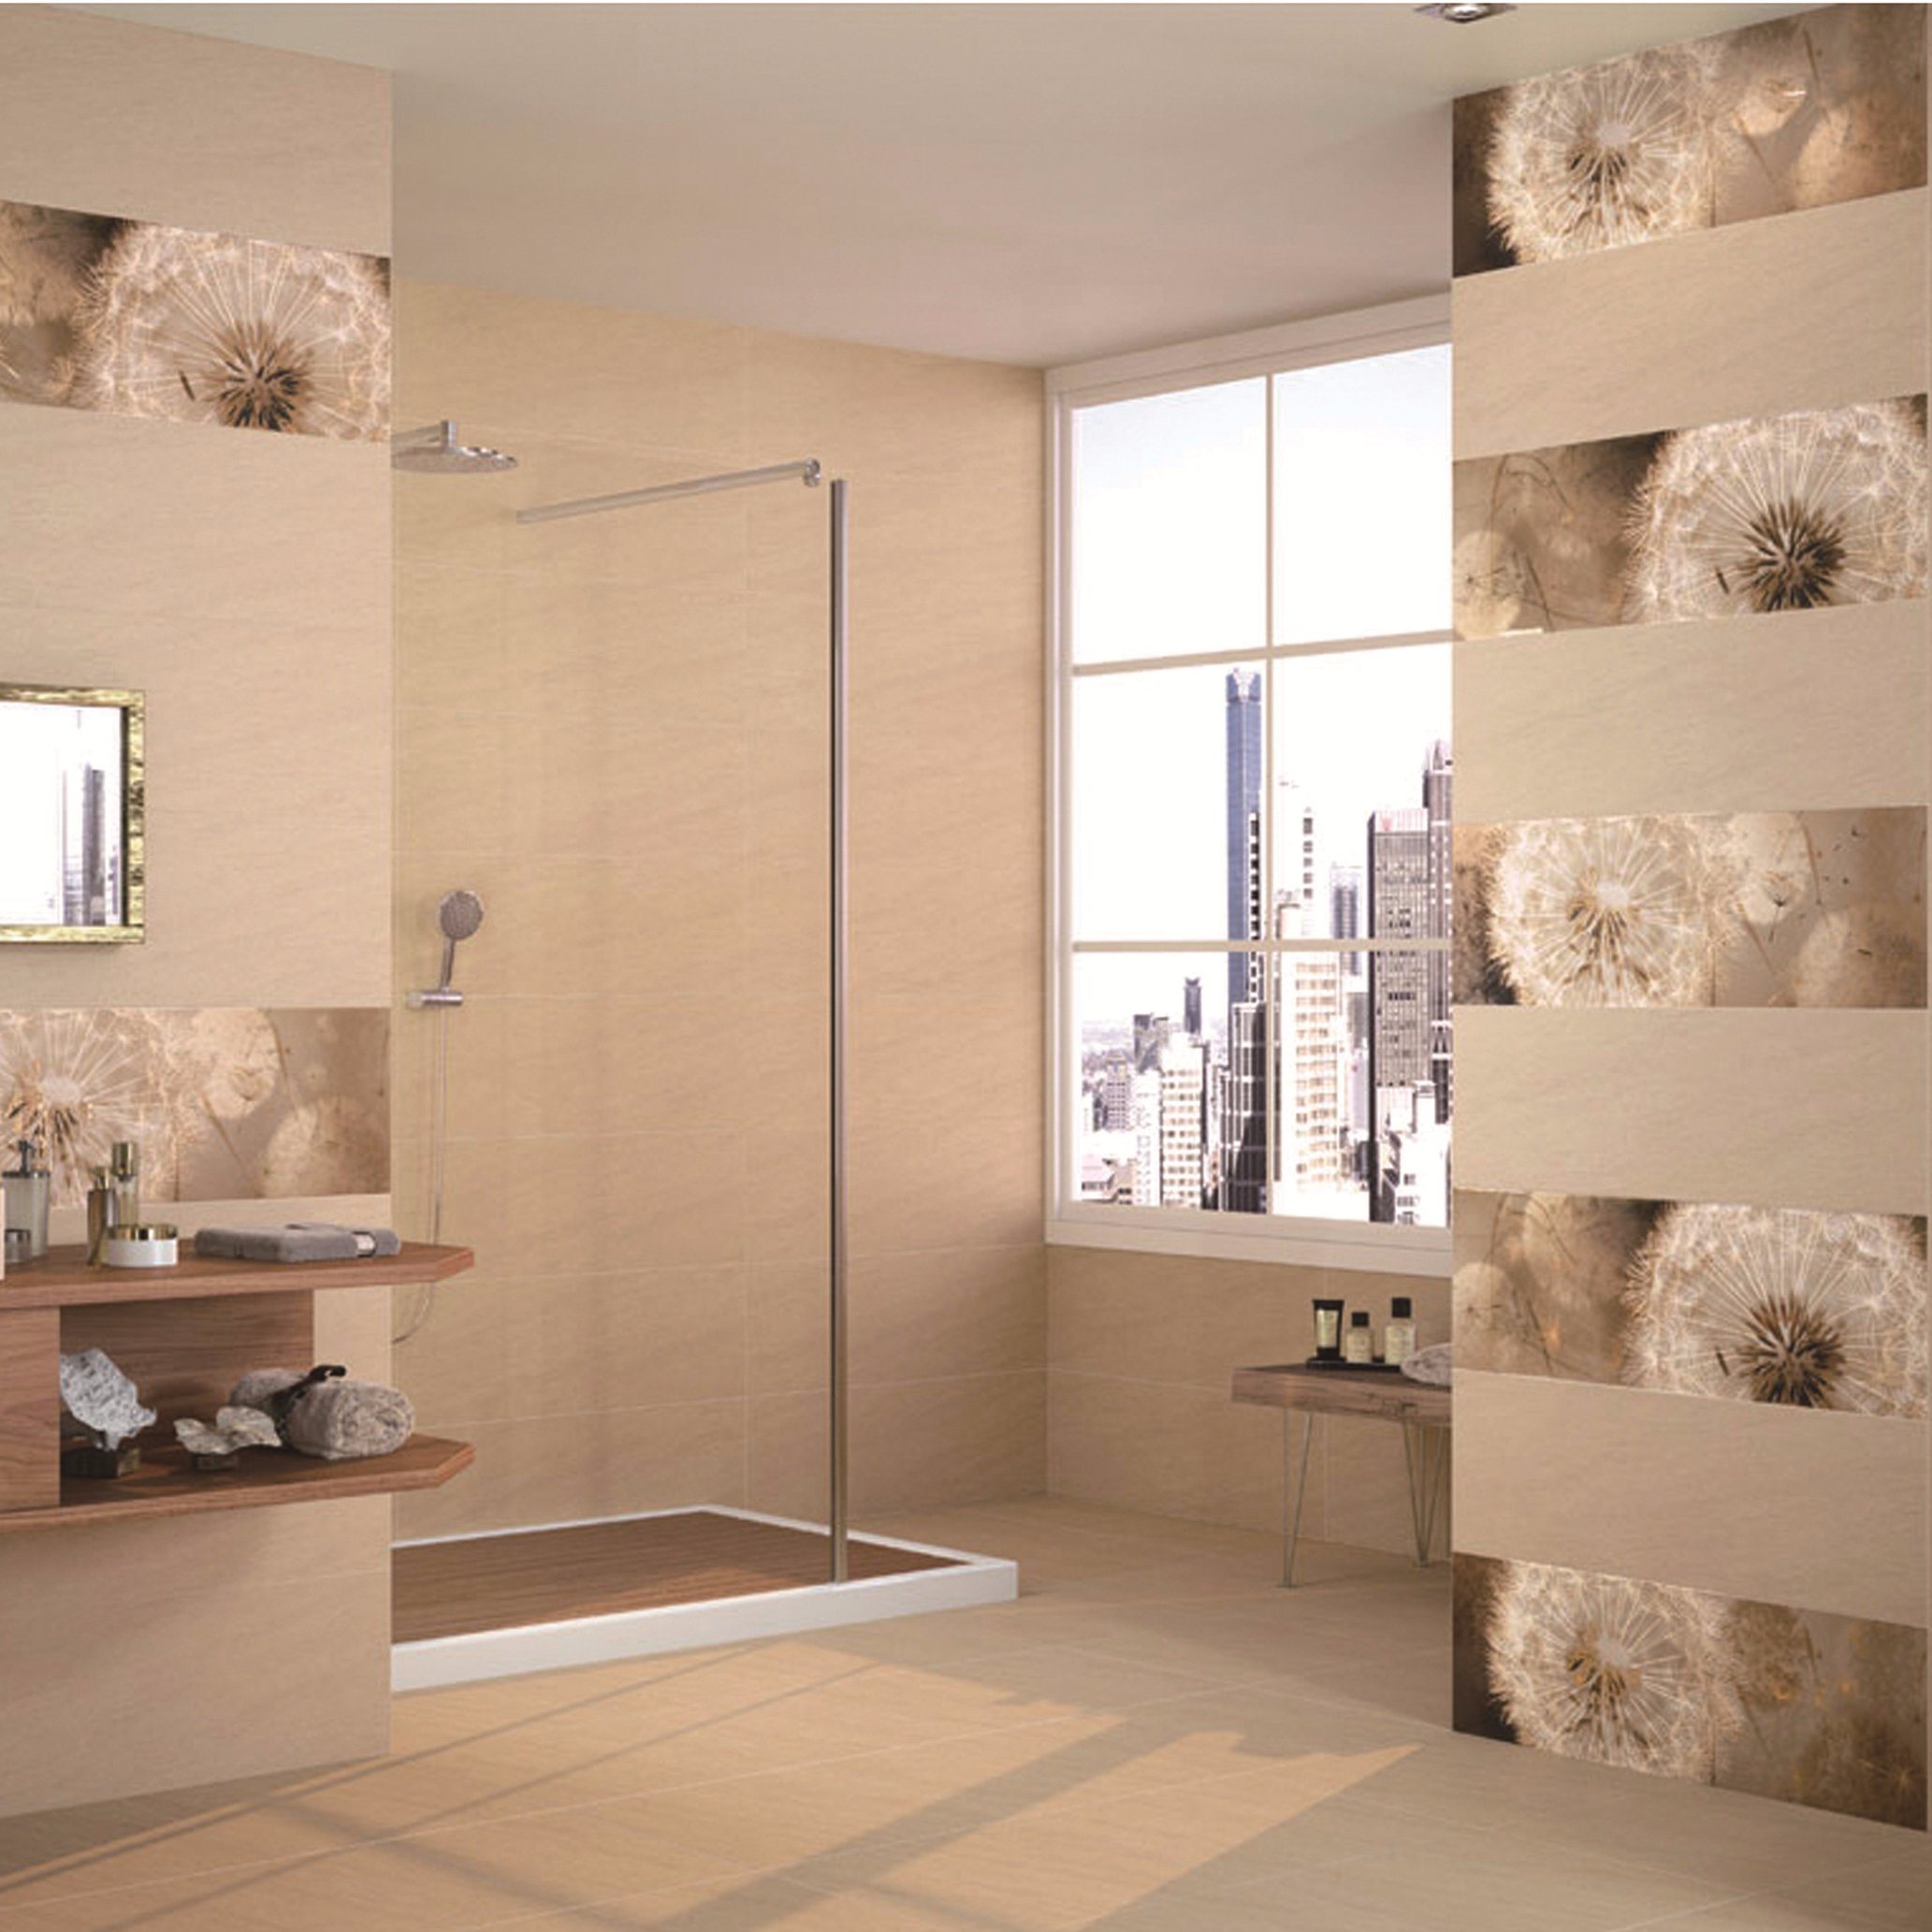 Inkjet Dandelion Glazed Interior Ceramic Wall Tile with ISO